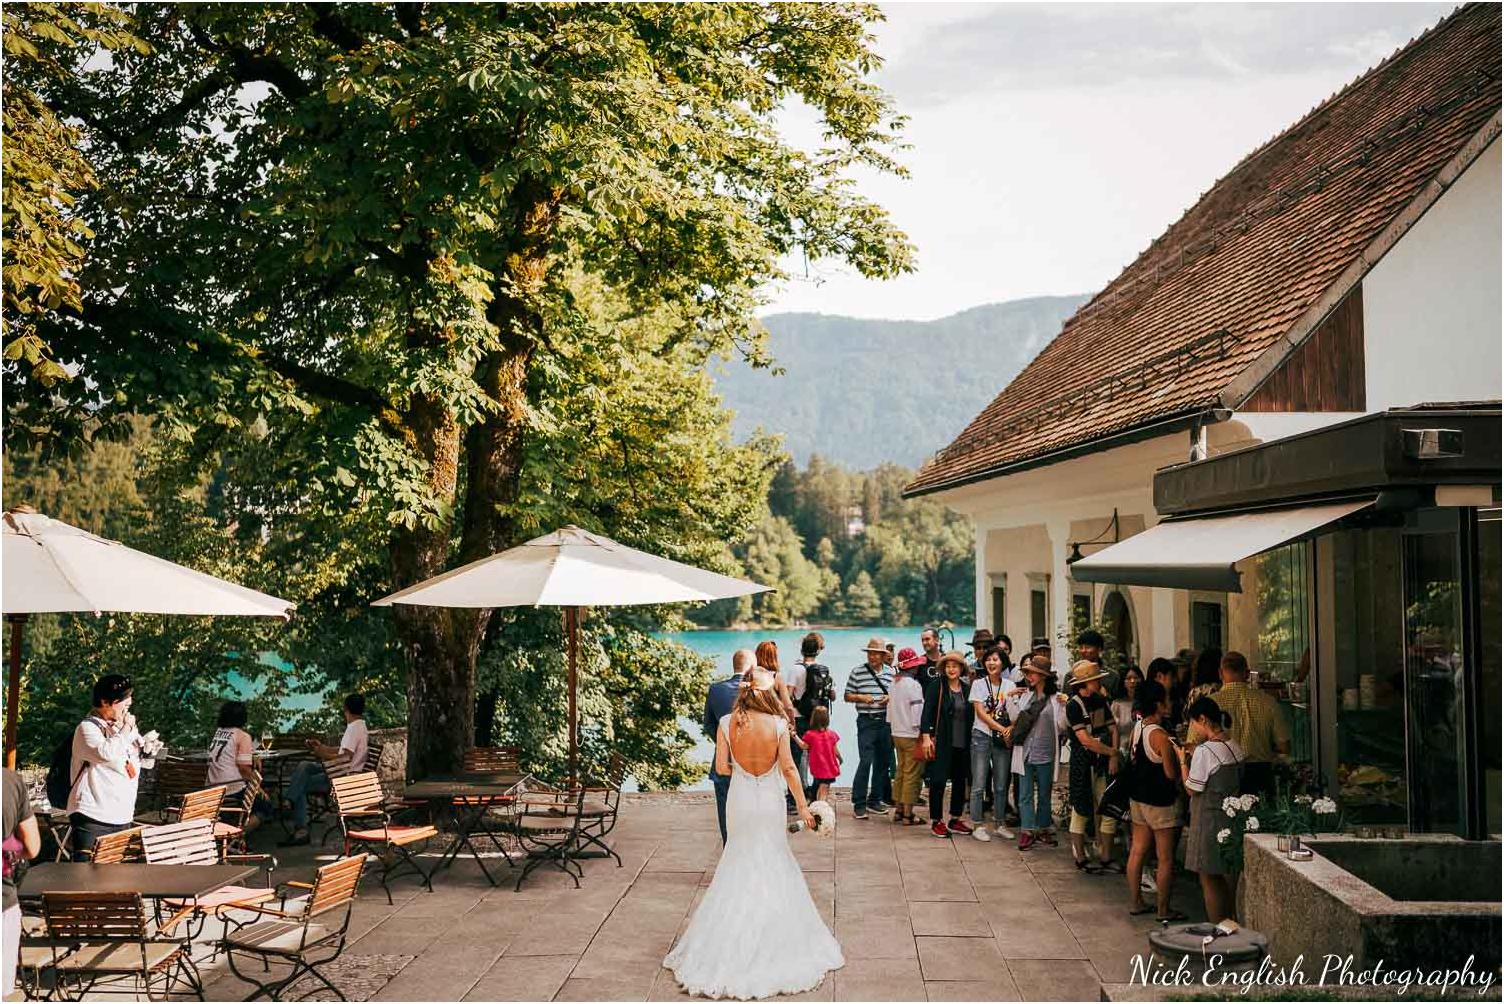 Destination_Wedding_Photographer_Slovenia_Nick_English_Photography-70-12.jpg